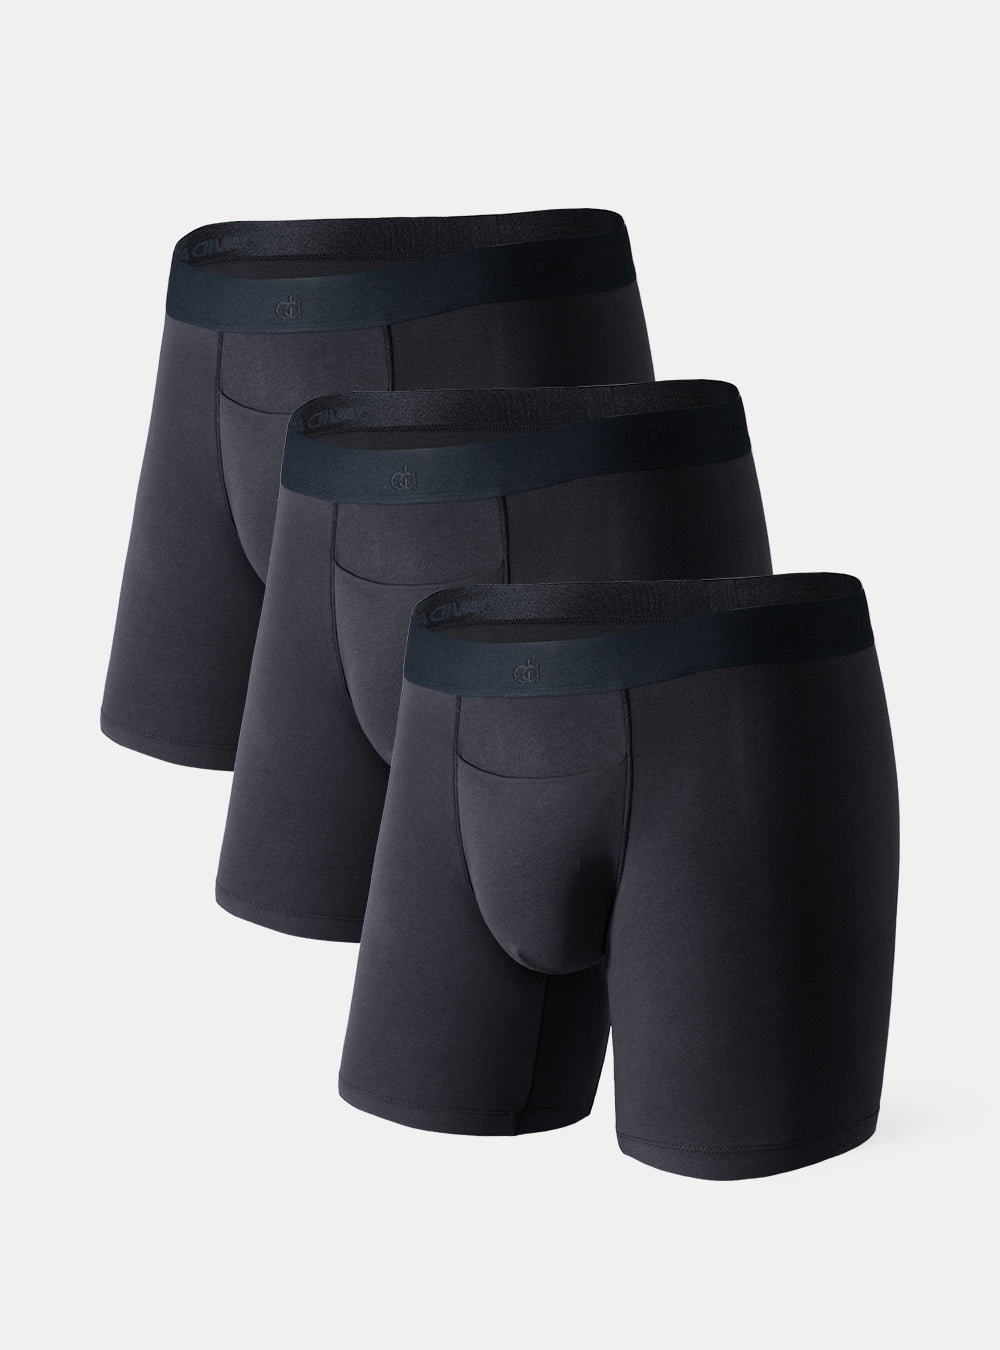 Male underwear packs